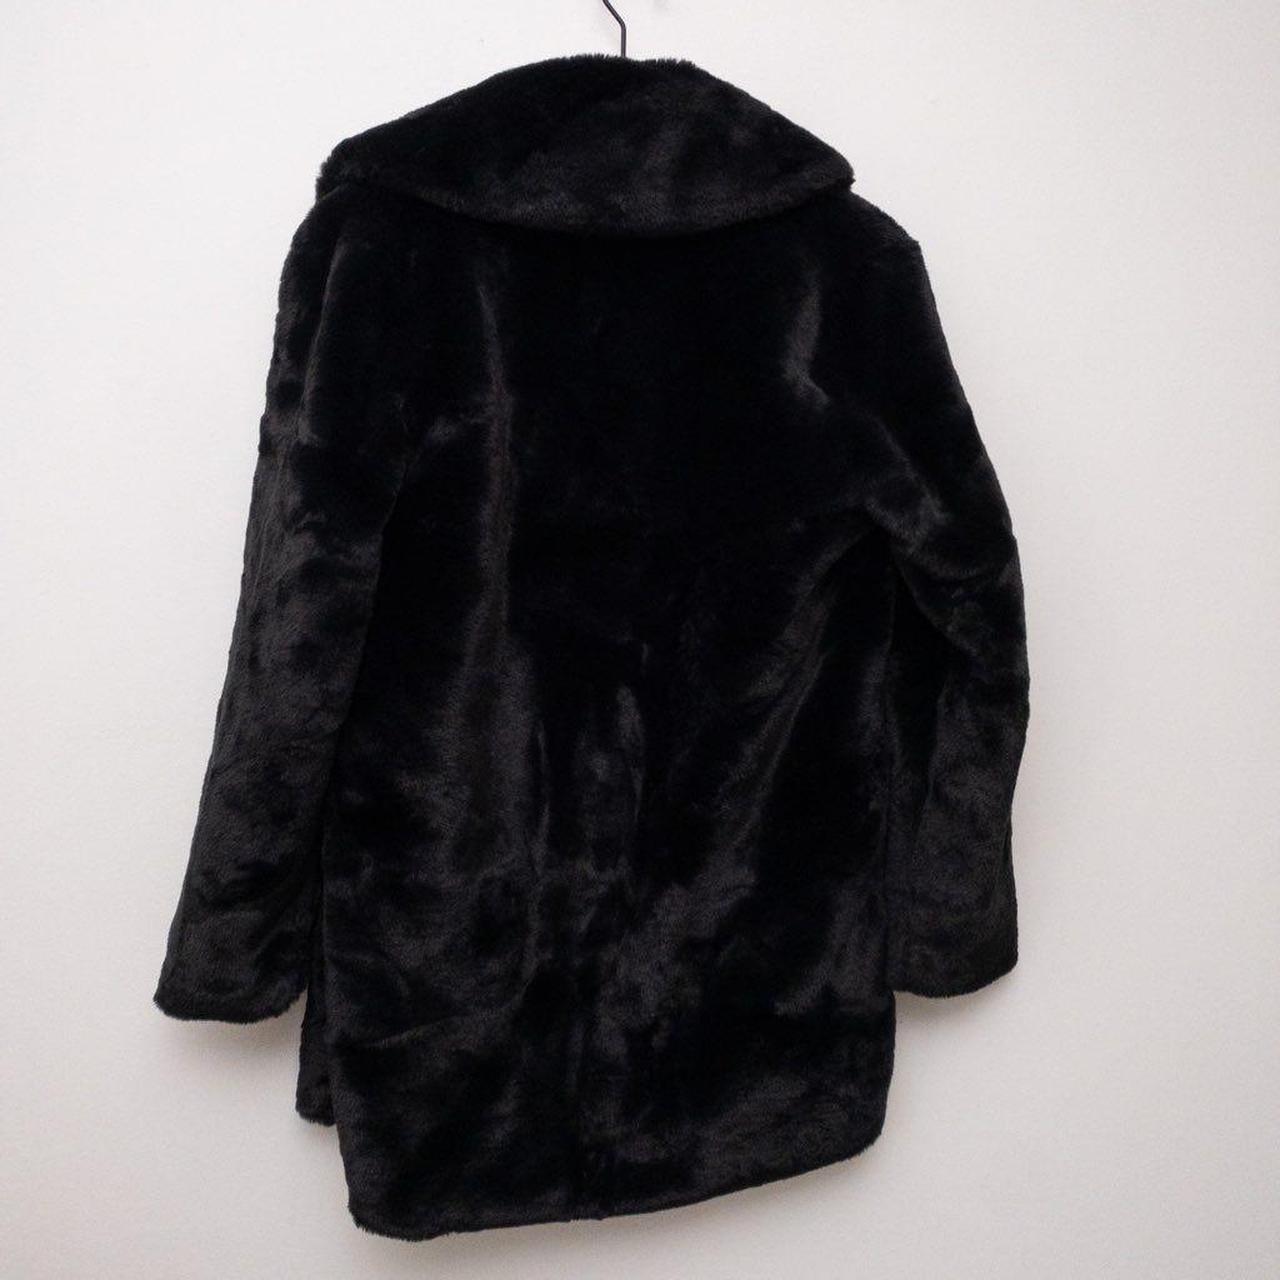 Abercrombie & Fitch Women's Black Coat (3)